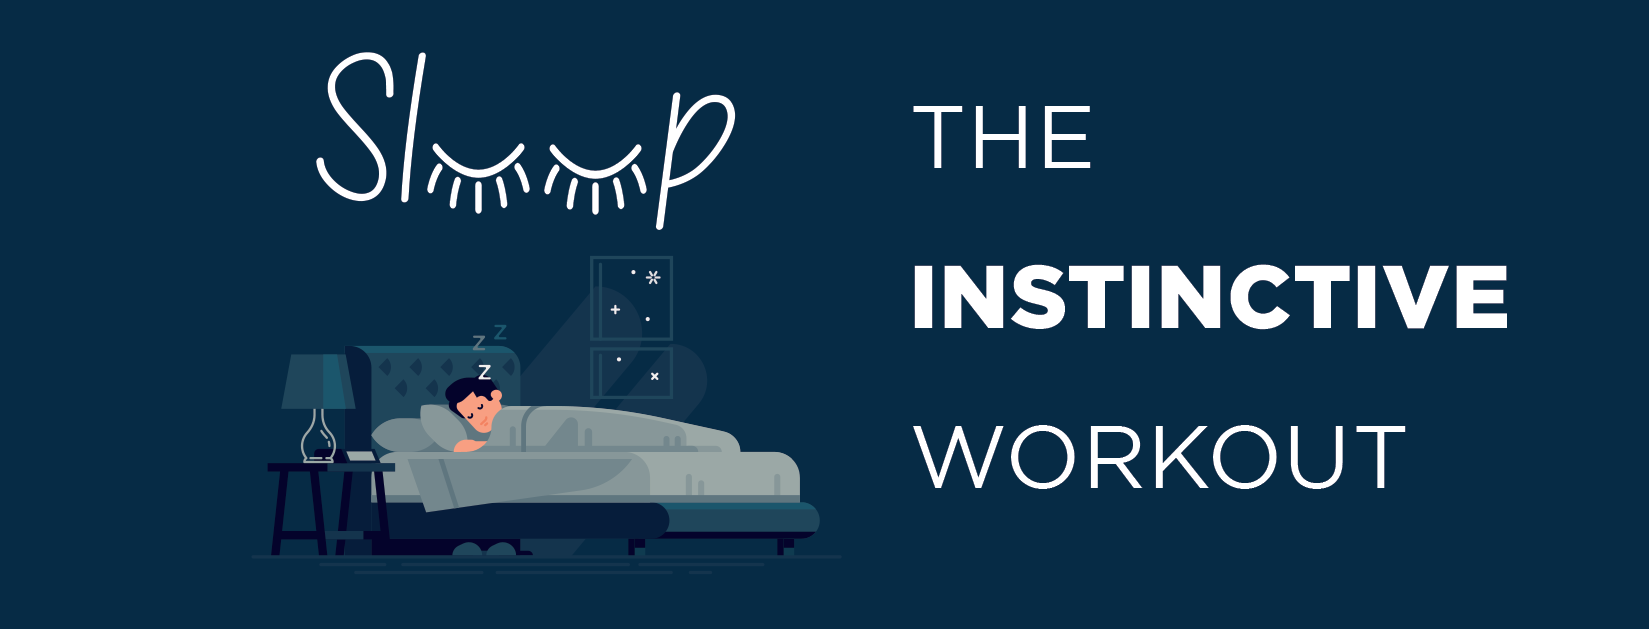 Sleep -The Instinctive Workout by Dr. David Synnott